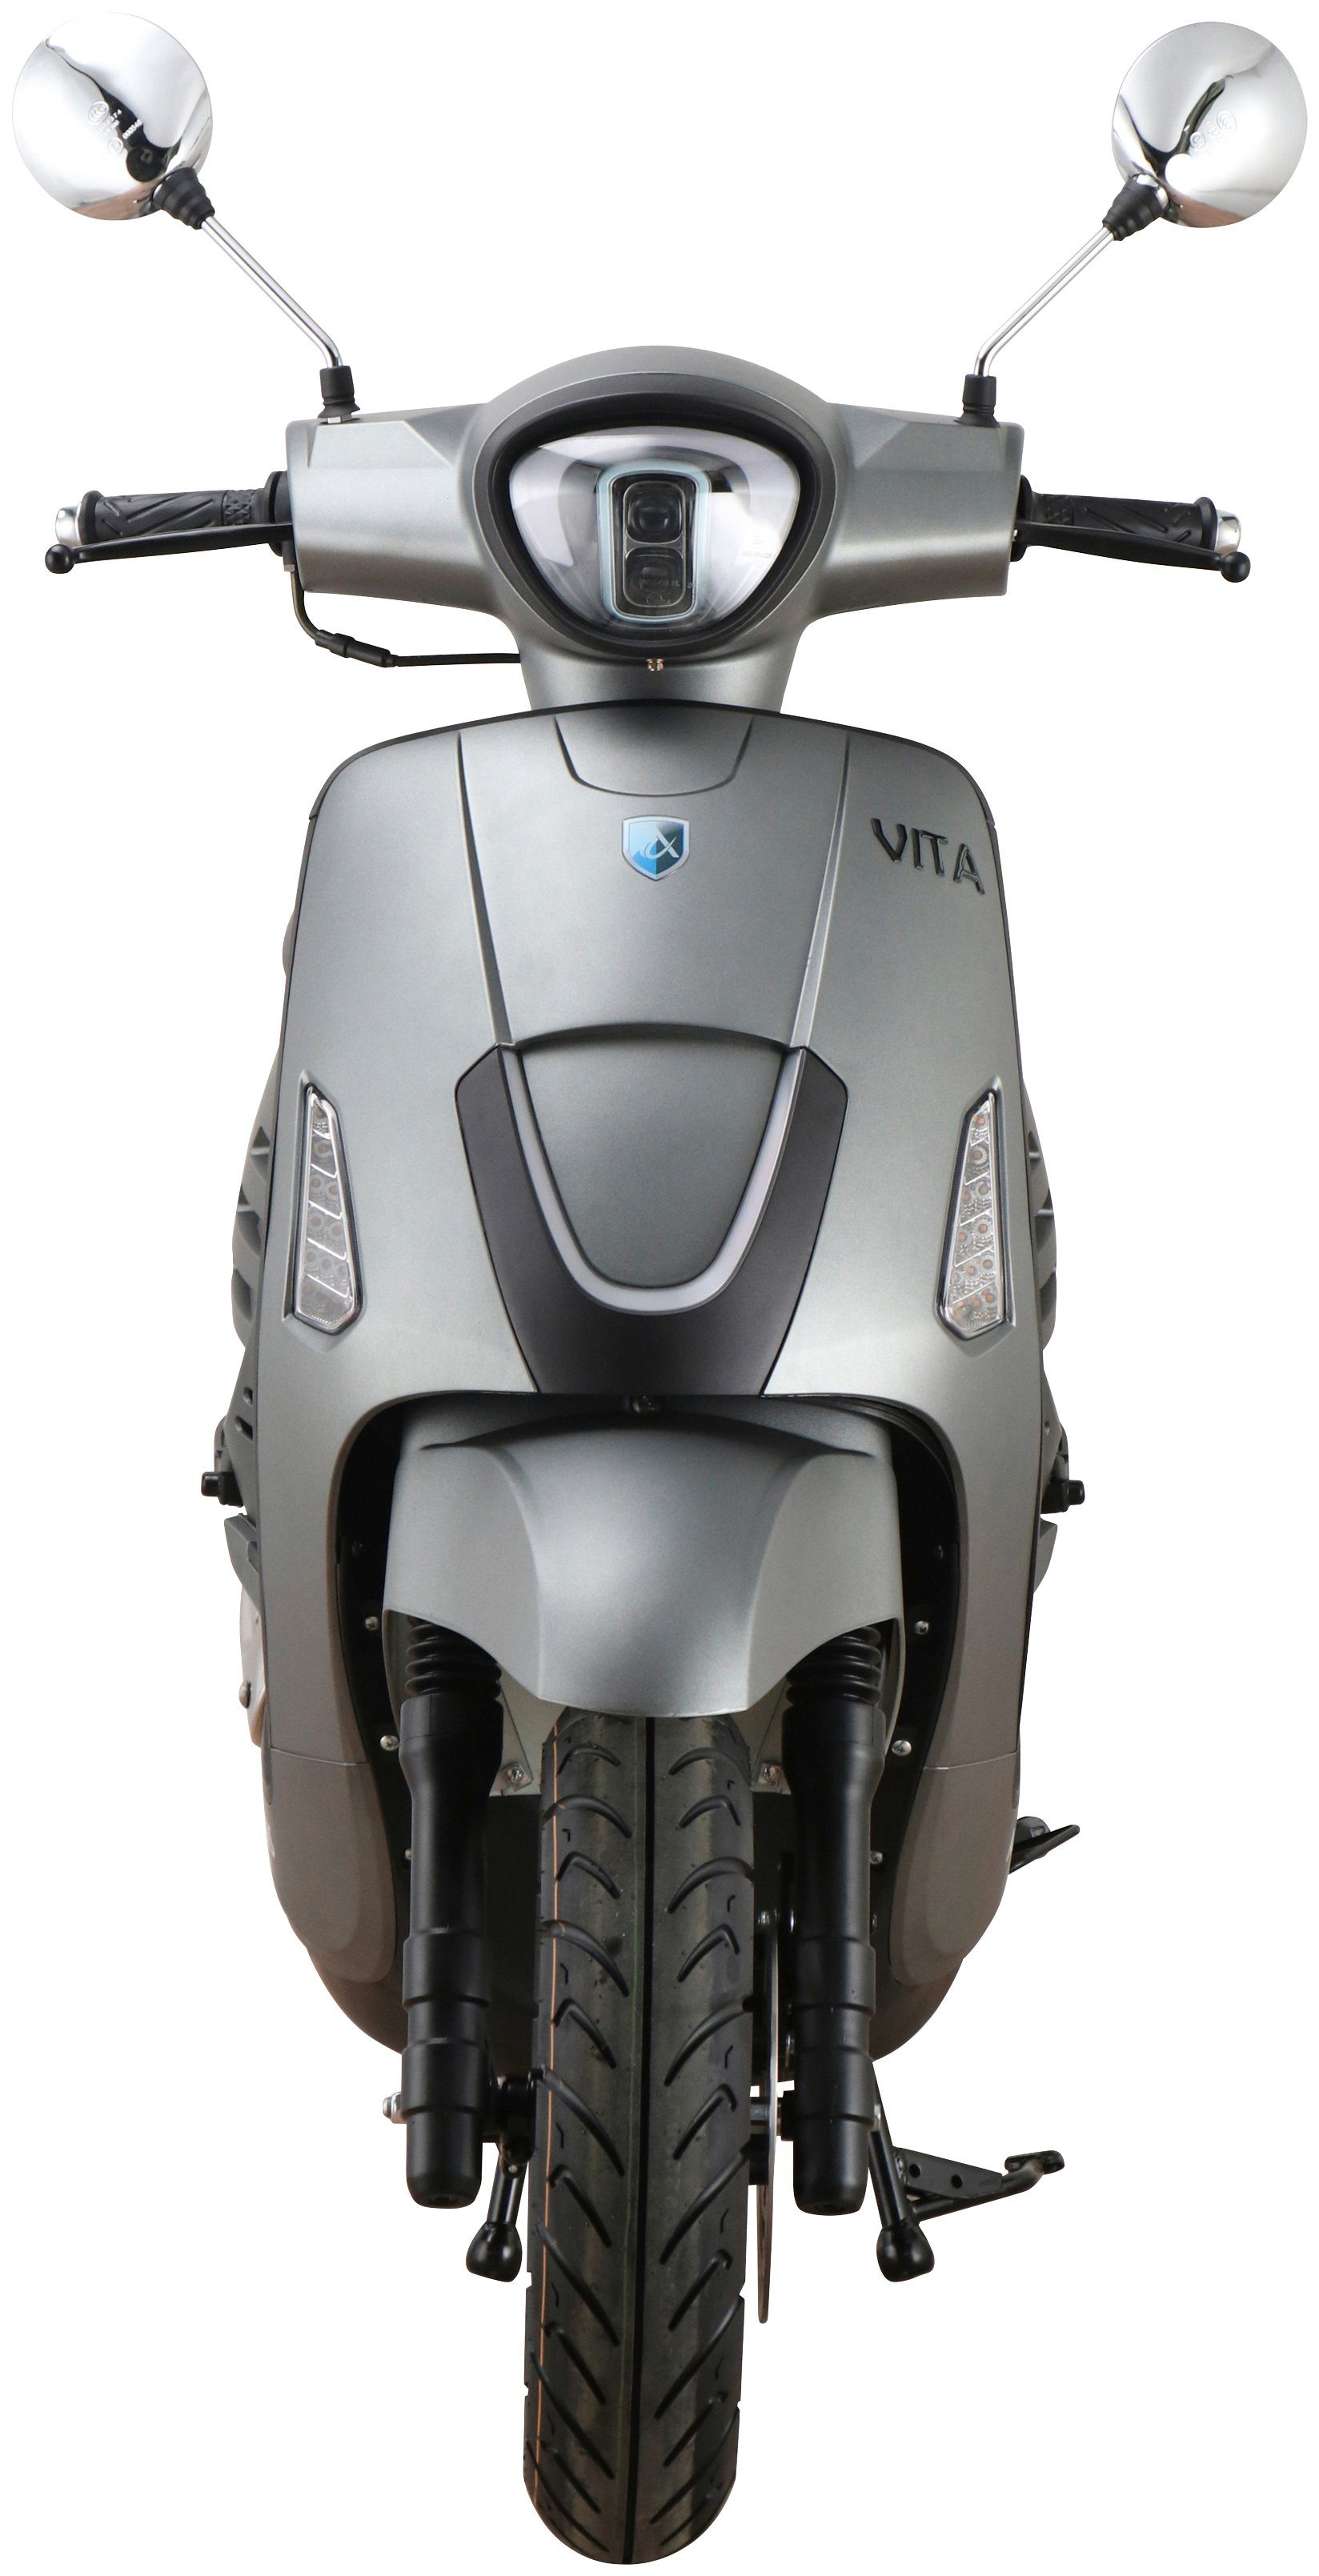 125 5 Motorroller Motors ccm, Alpha Euro km/h, 85 Vita,